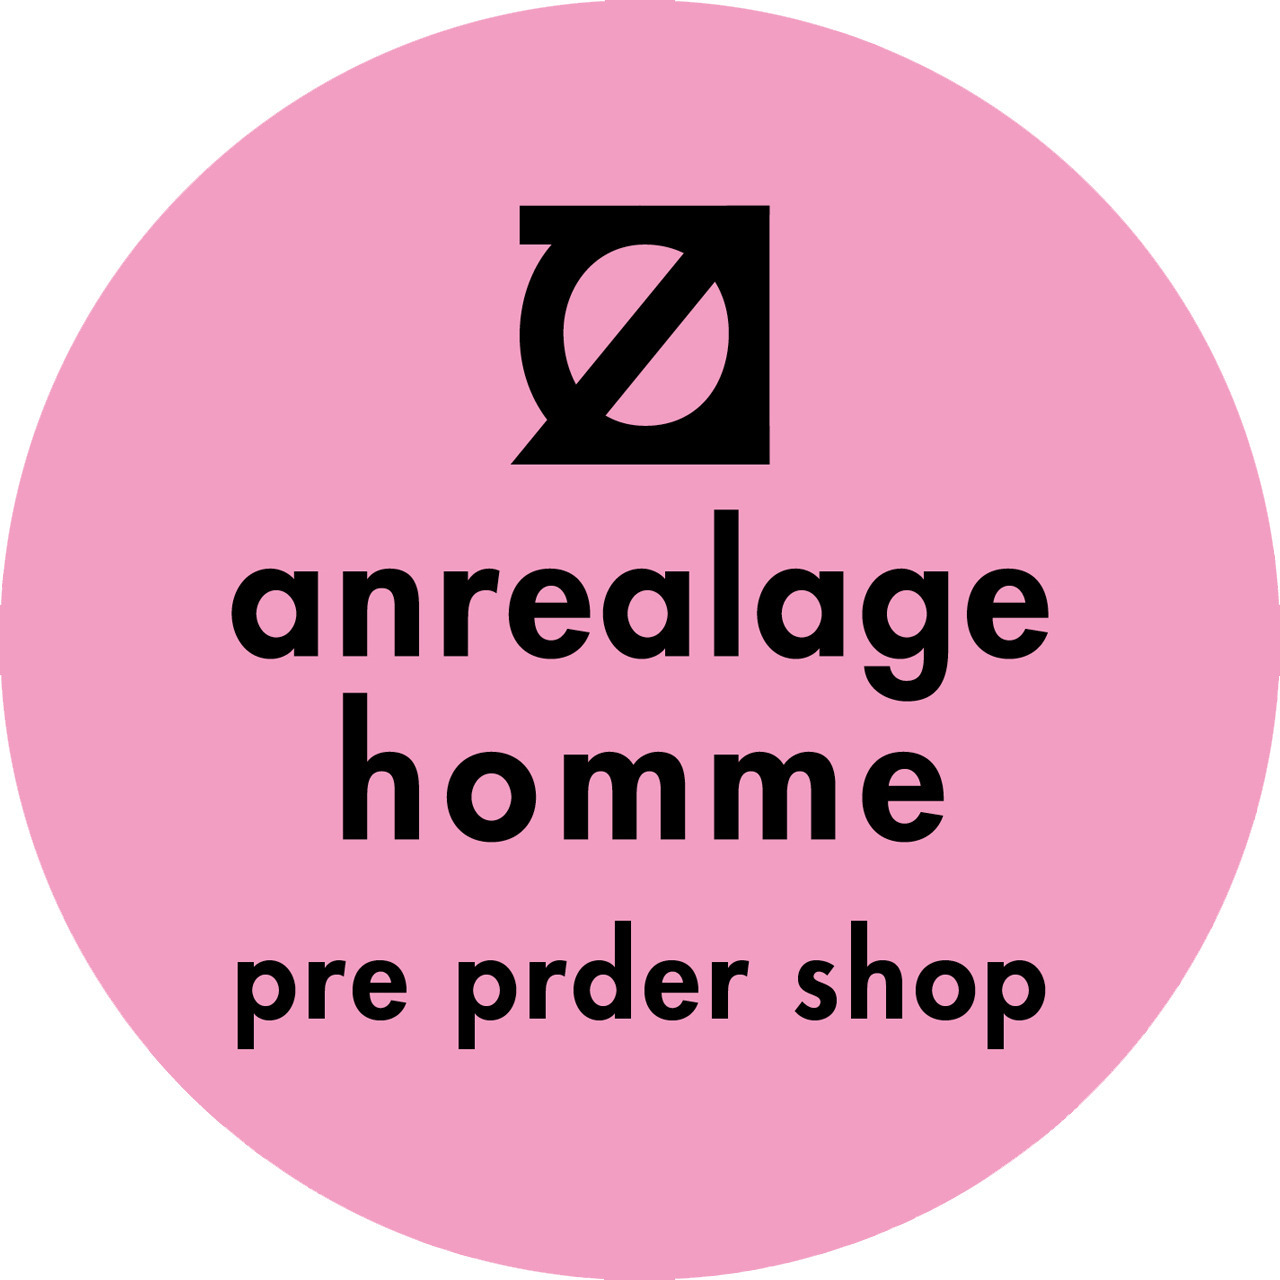 anrealage homme pre prder shop 4/2(tue) open